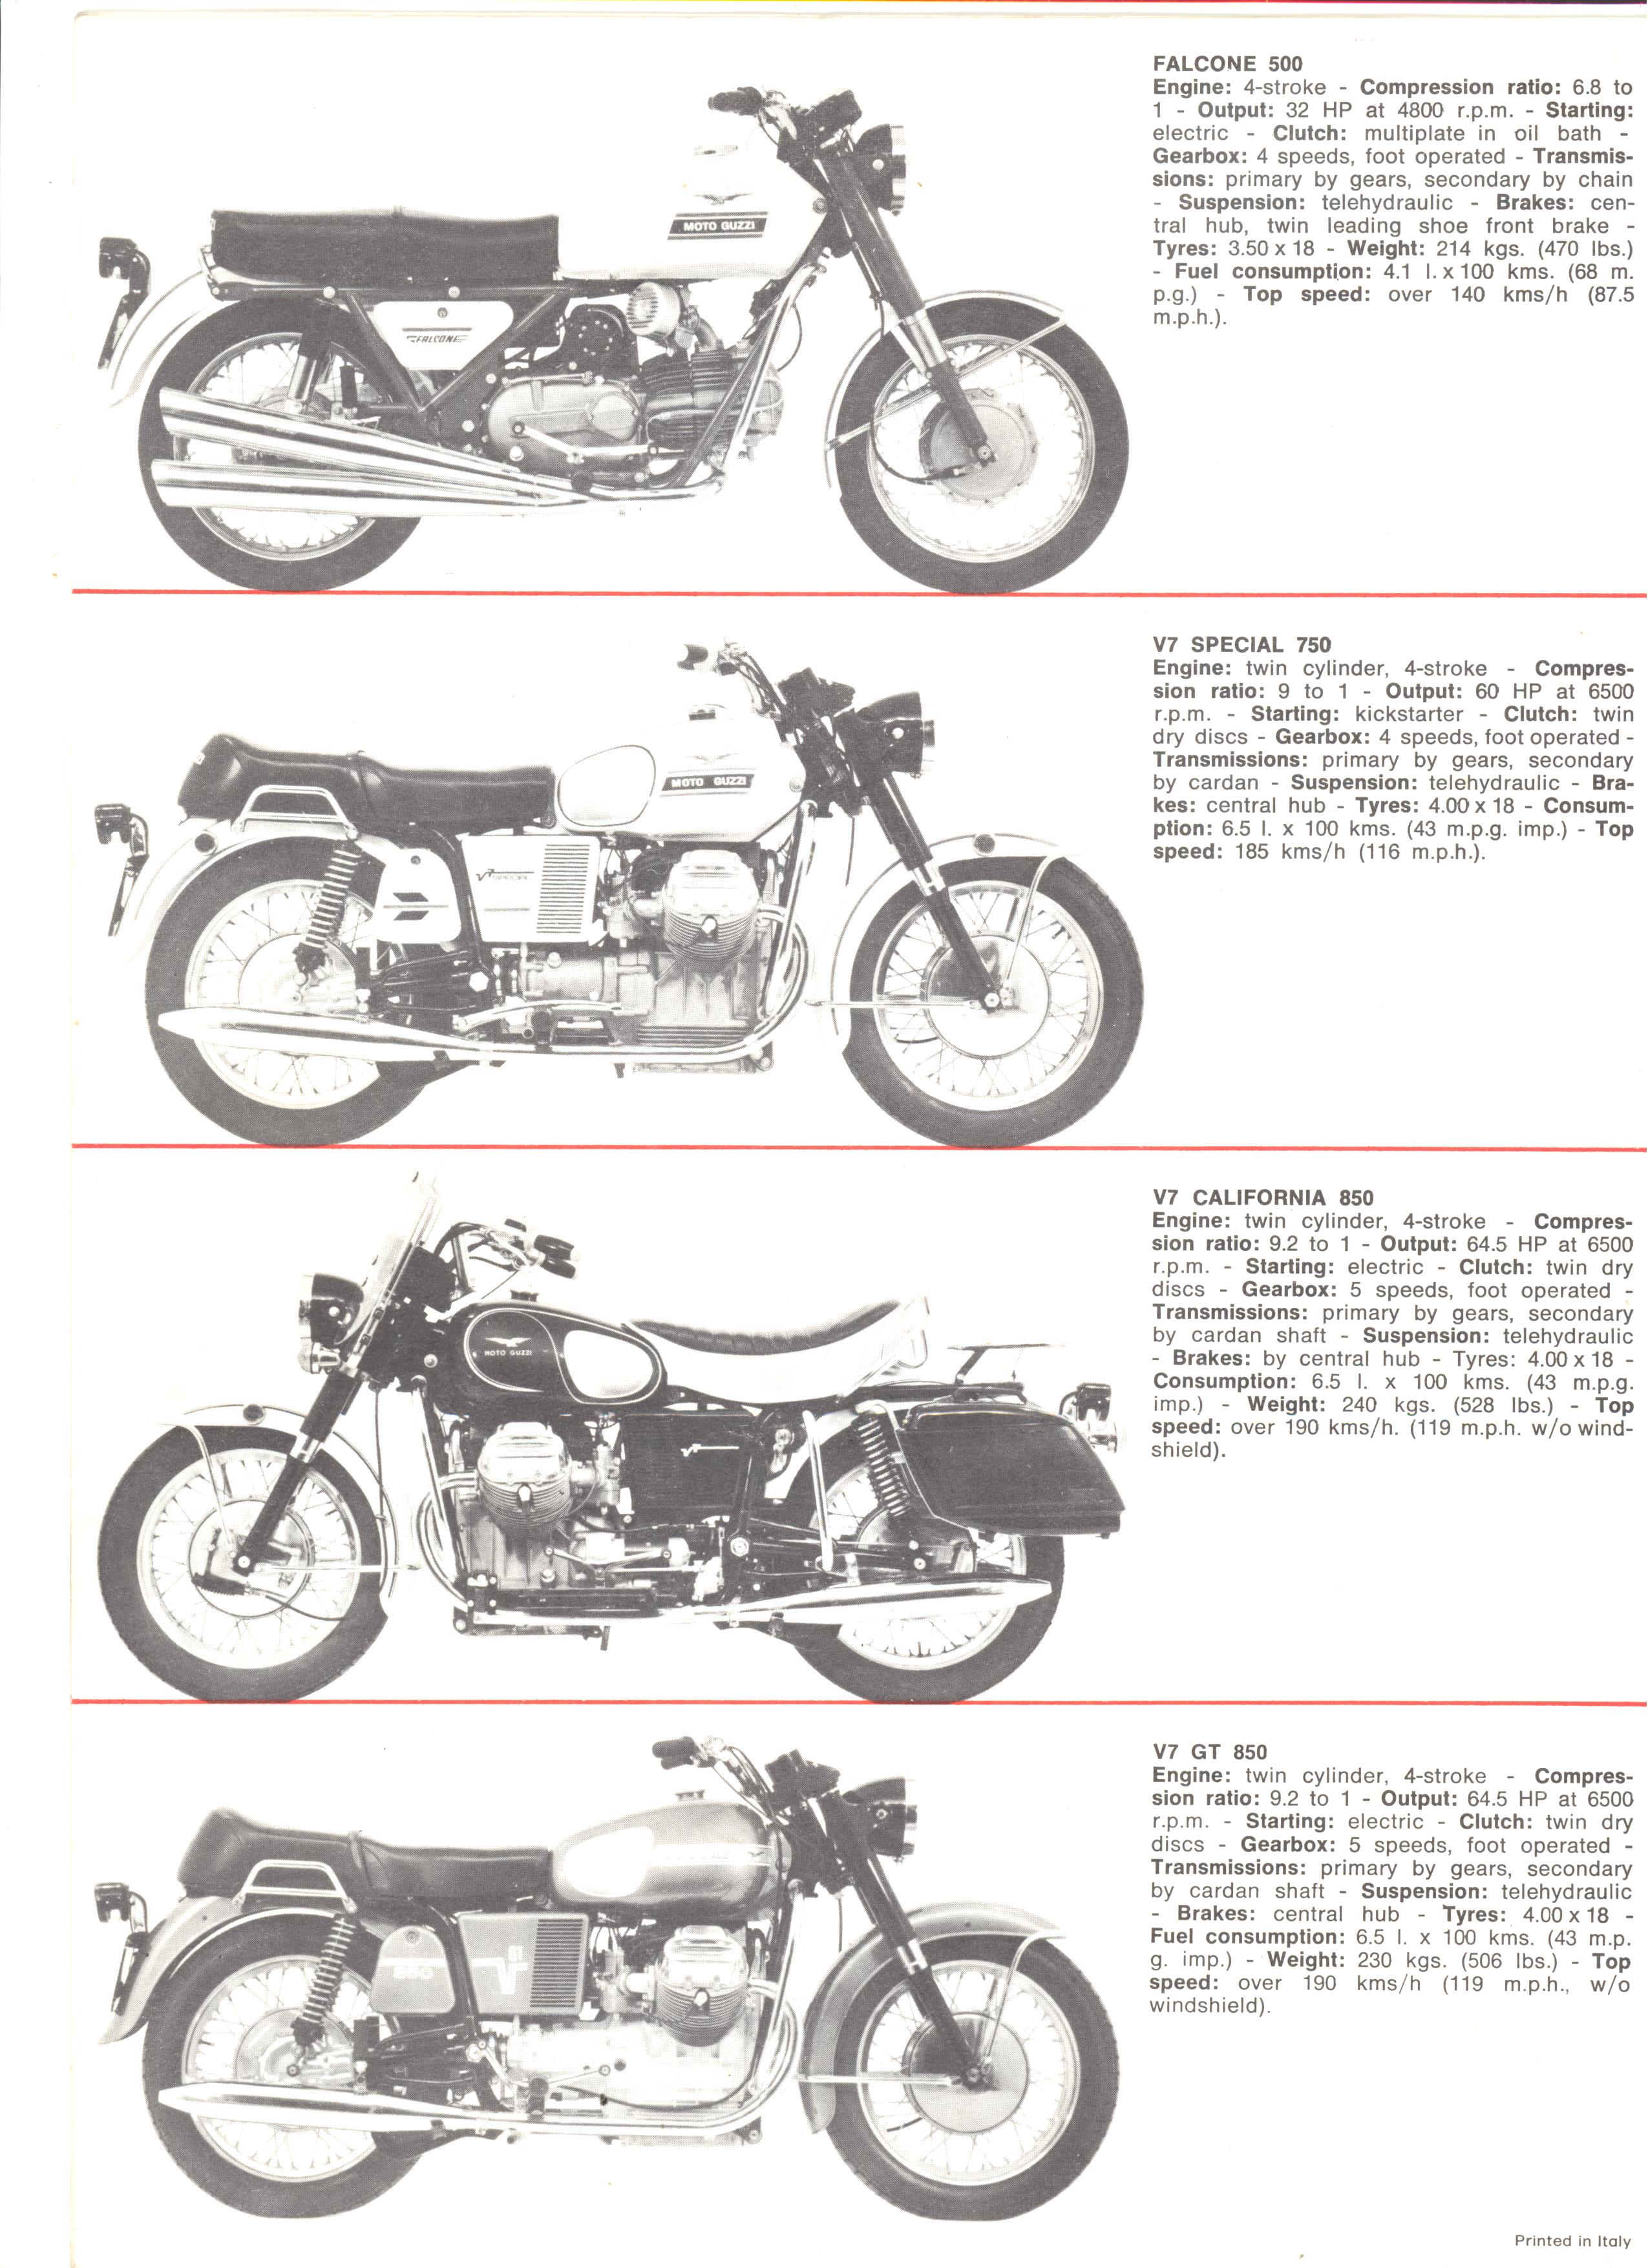 Moto Guzzi factory brochure: 1972 Production Motorcycles